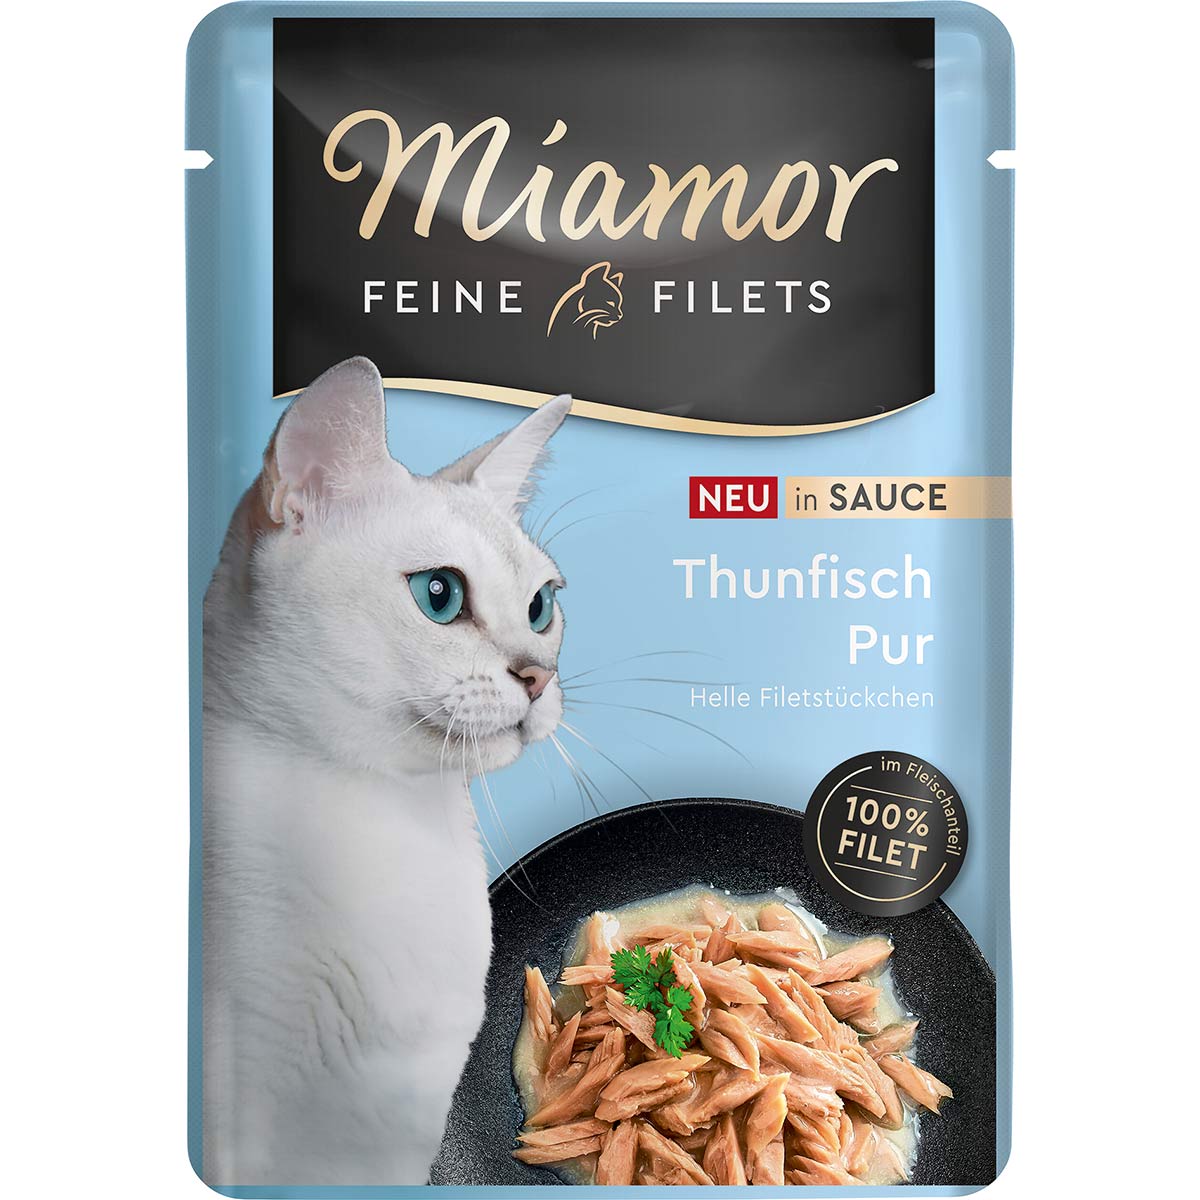 Miamor Feine Filets in Sauce Thunfisch Pur 24x100g